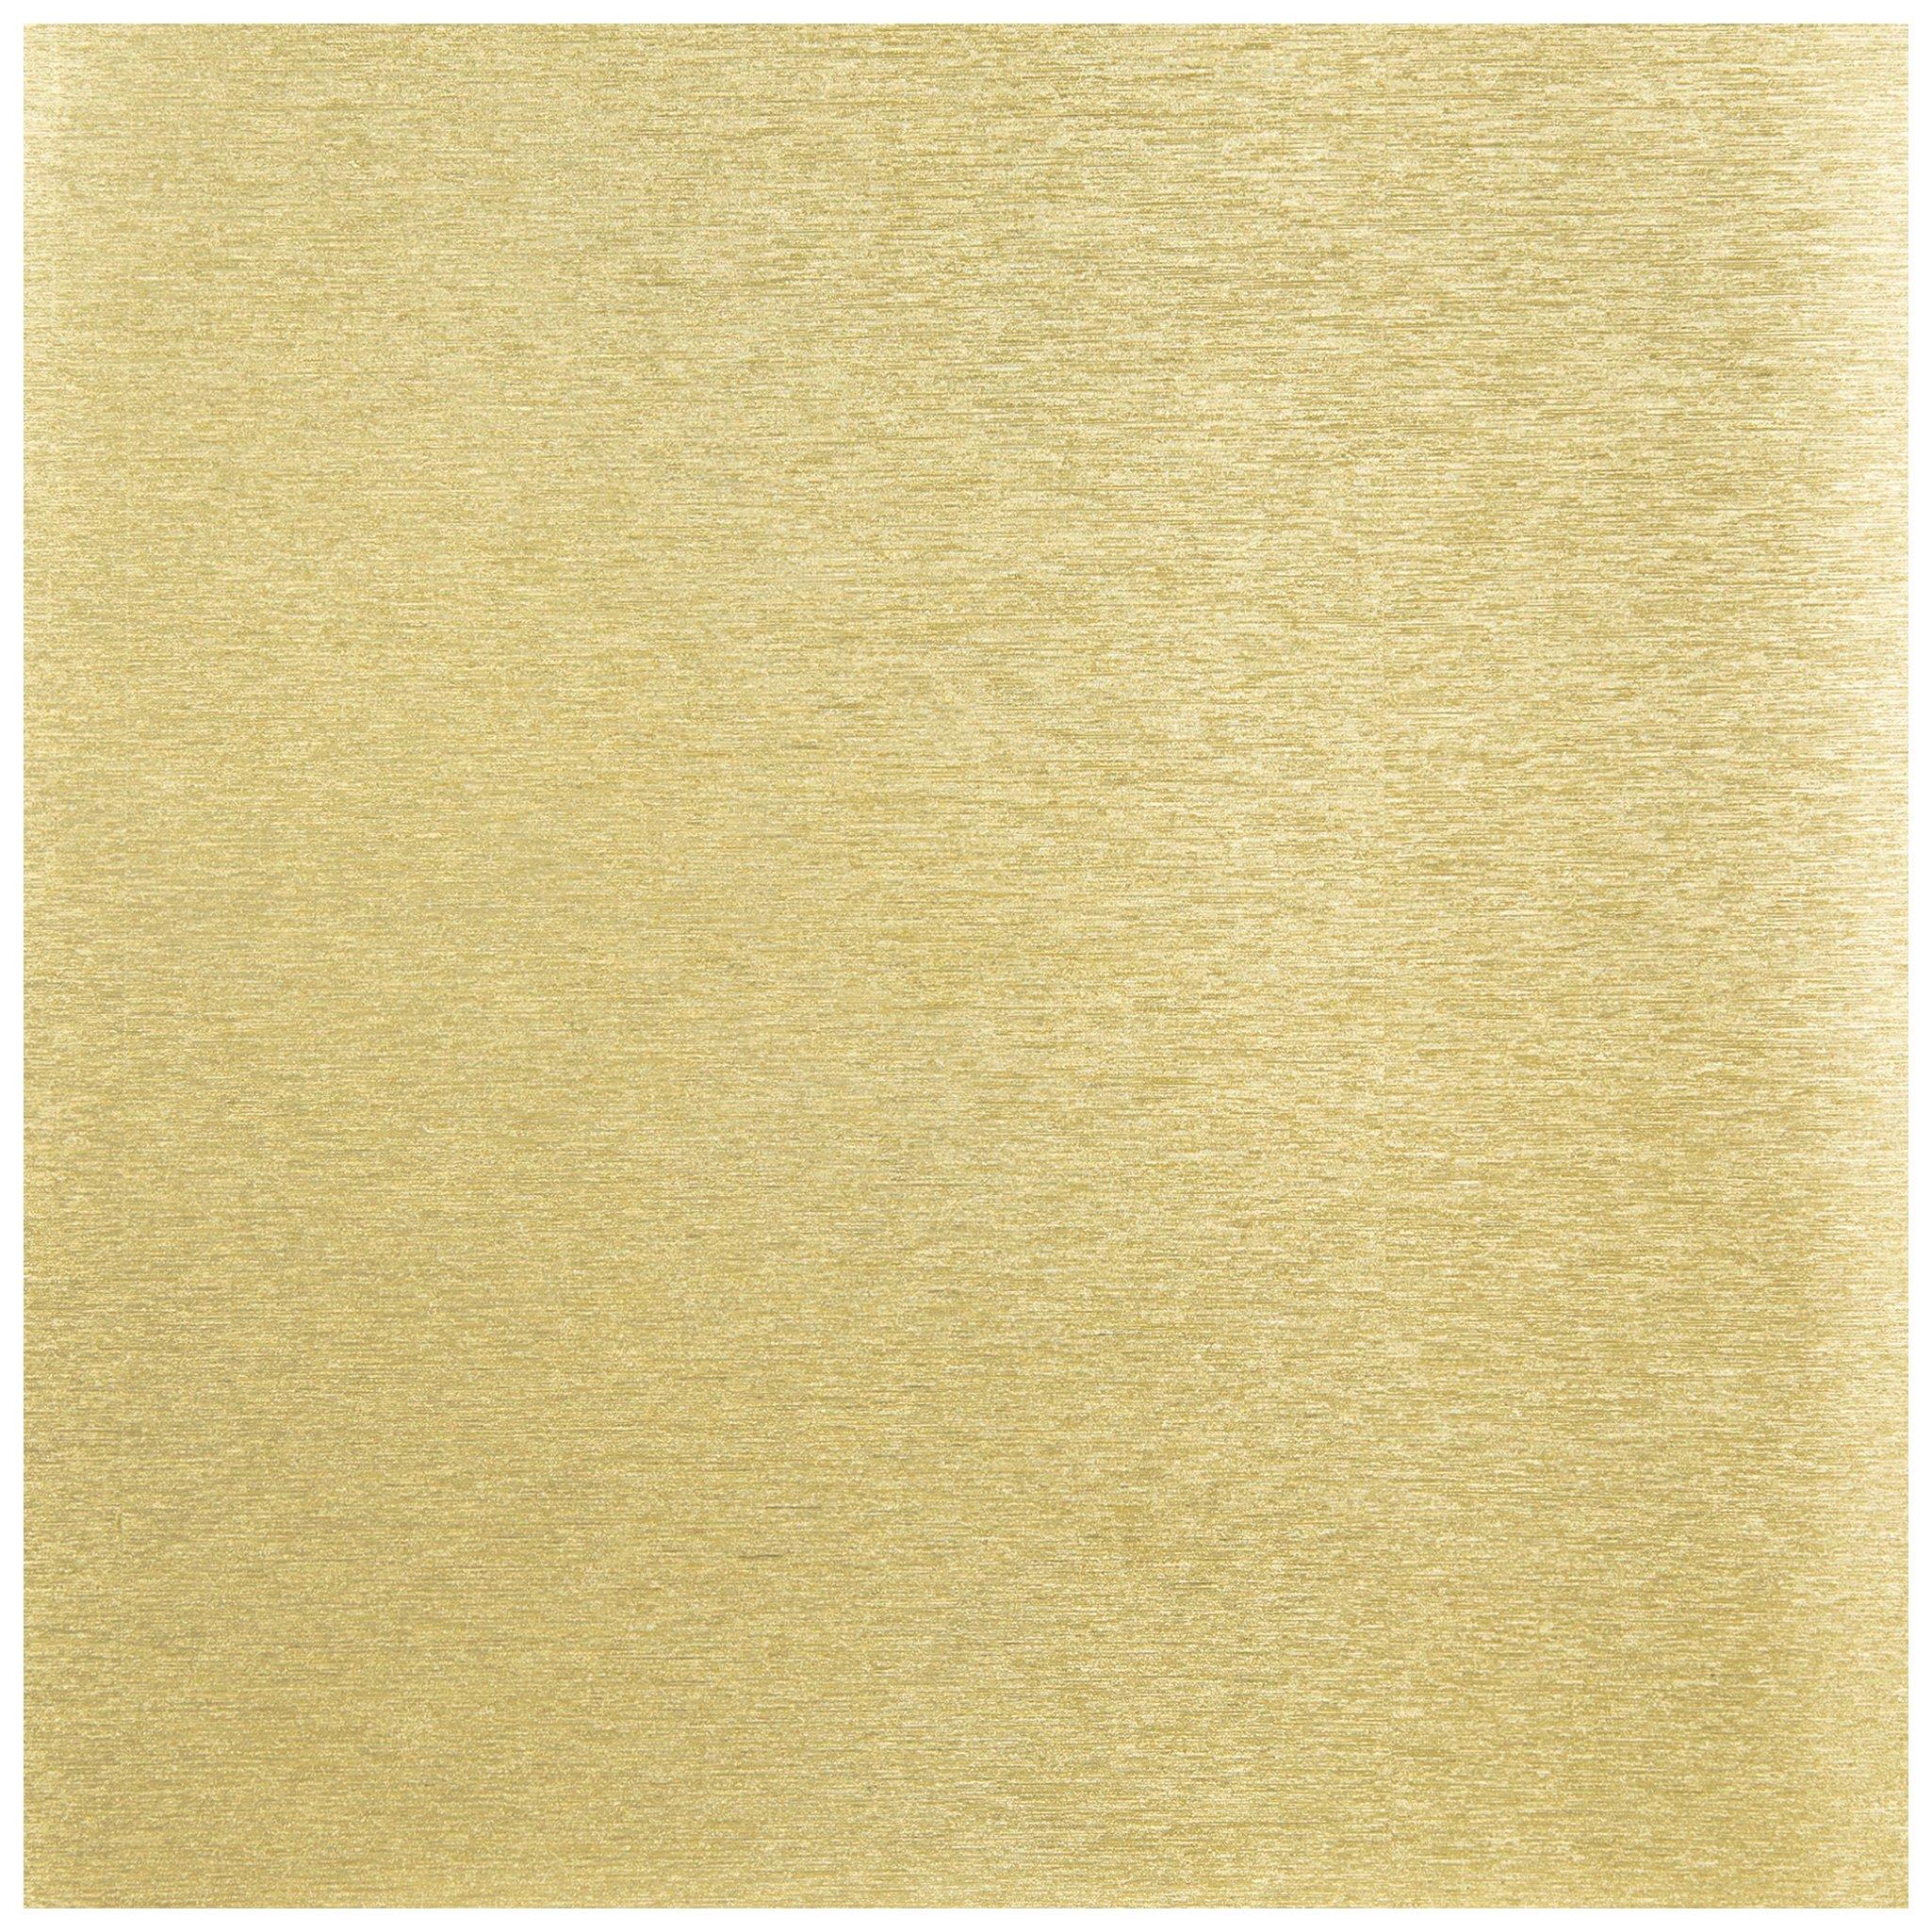 Shine (Light) GOLD - Shimmer Metallic Paper - 12 x 12 - 80lb Text (118gsm)